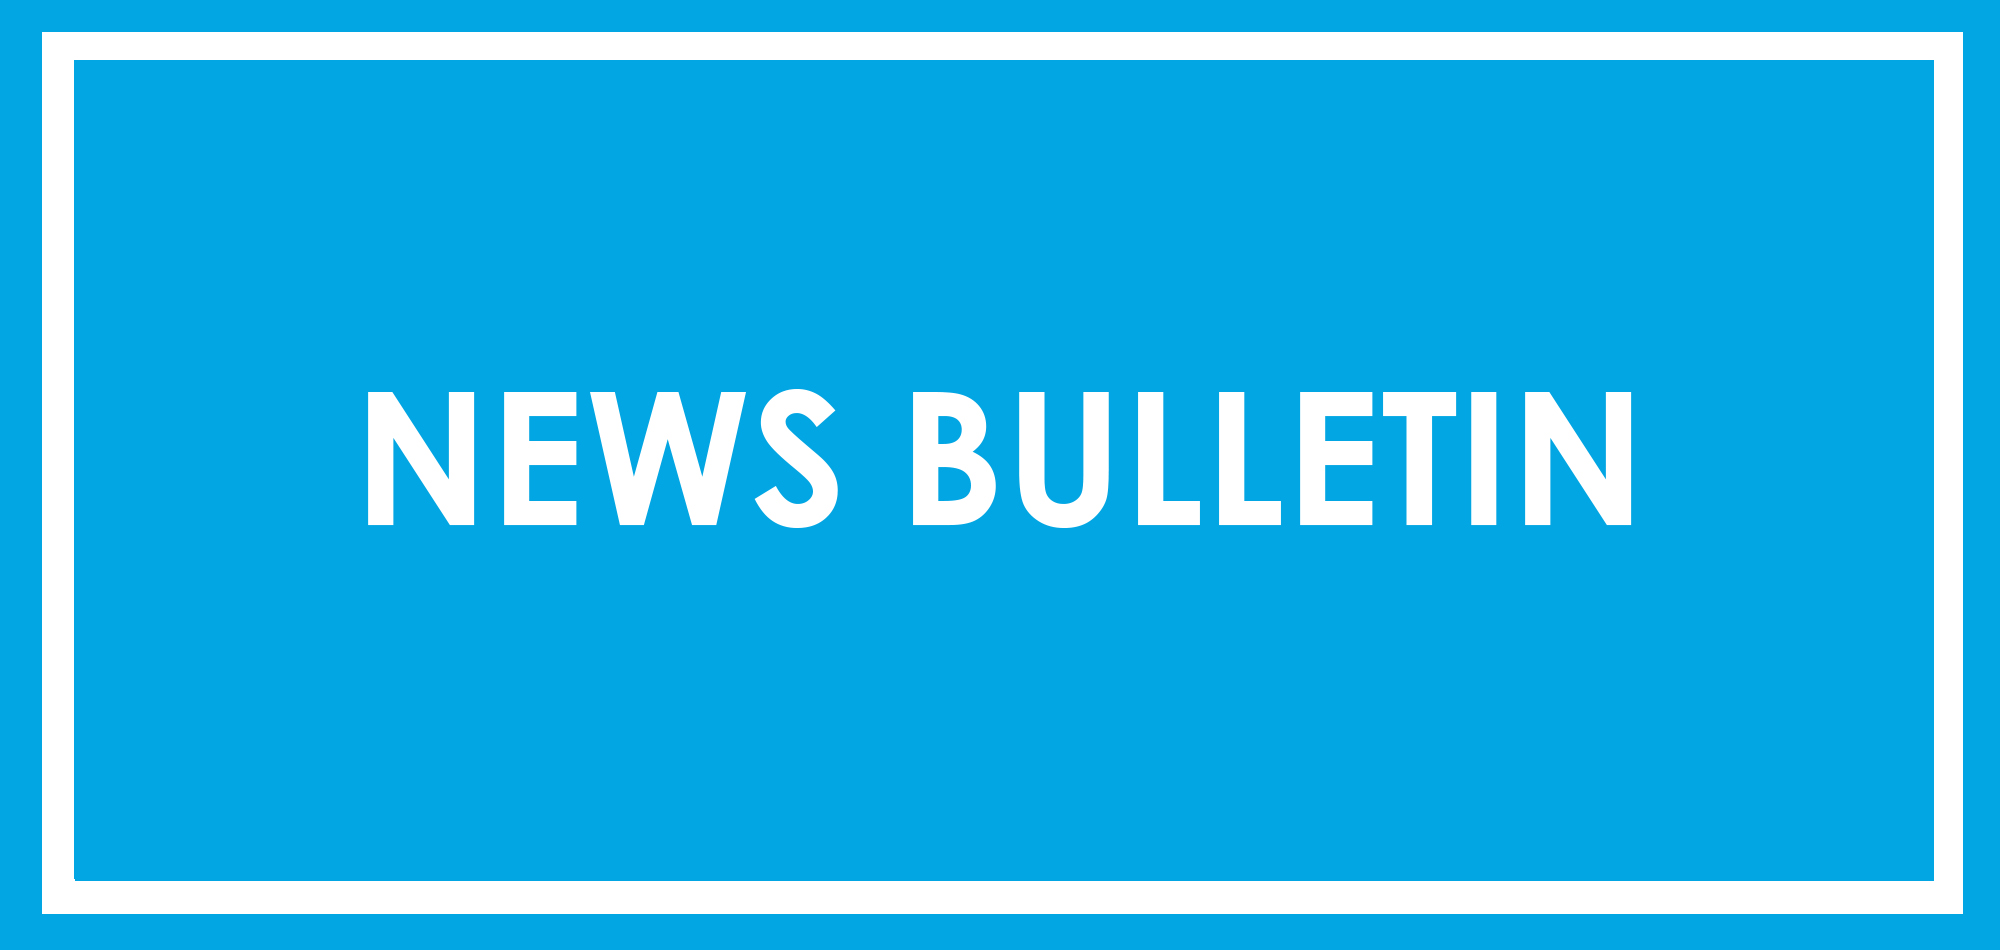 News Bulletin - 10.09.20